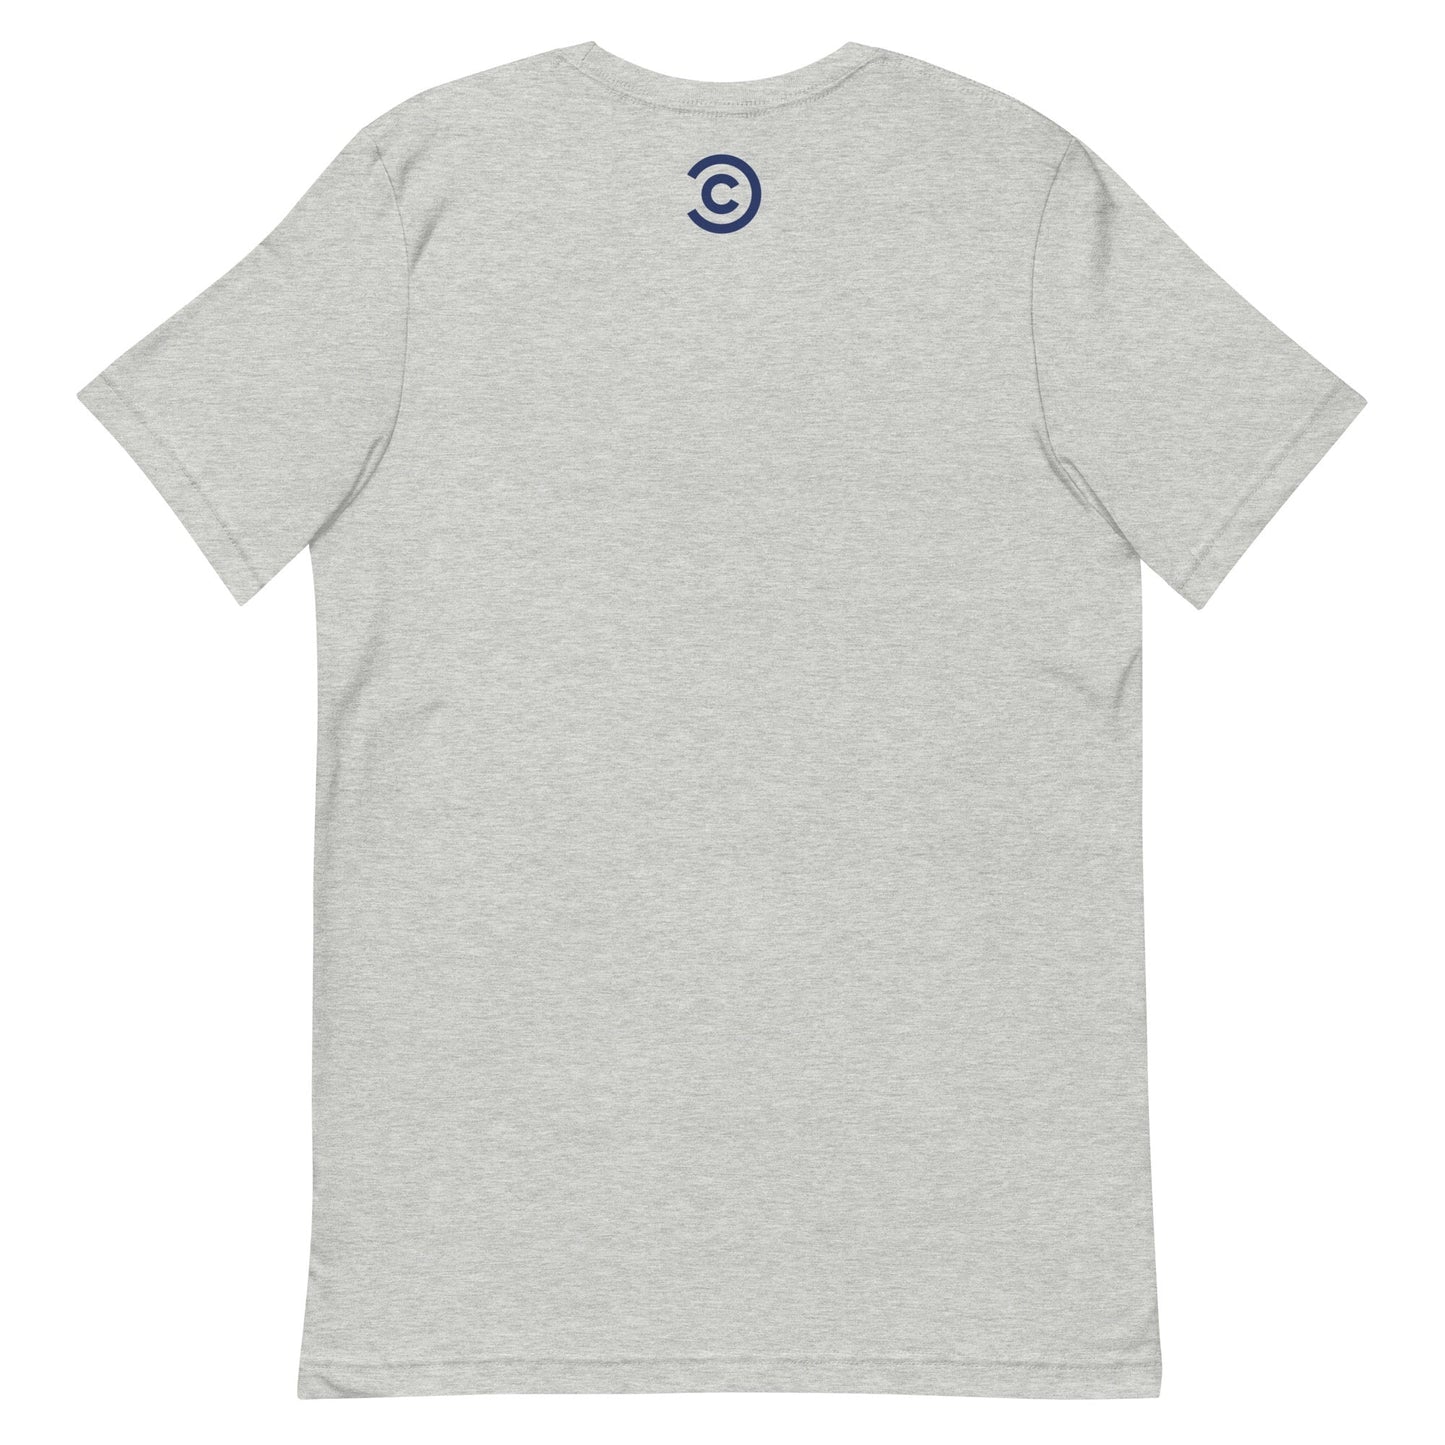 The Daily Show Logo Unisex T - Shirt - Paramount Shop